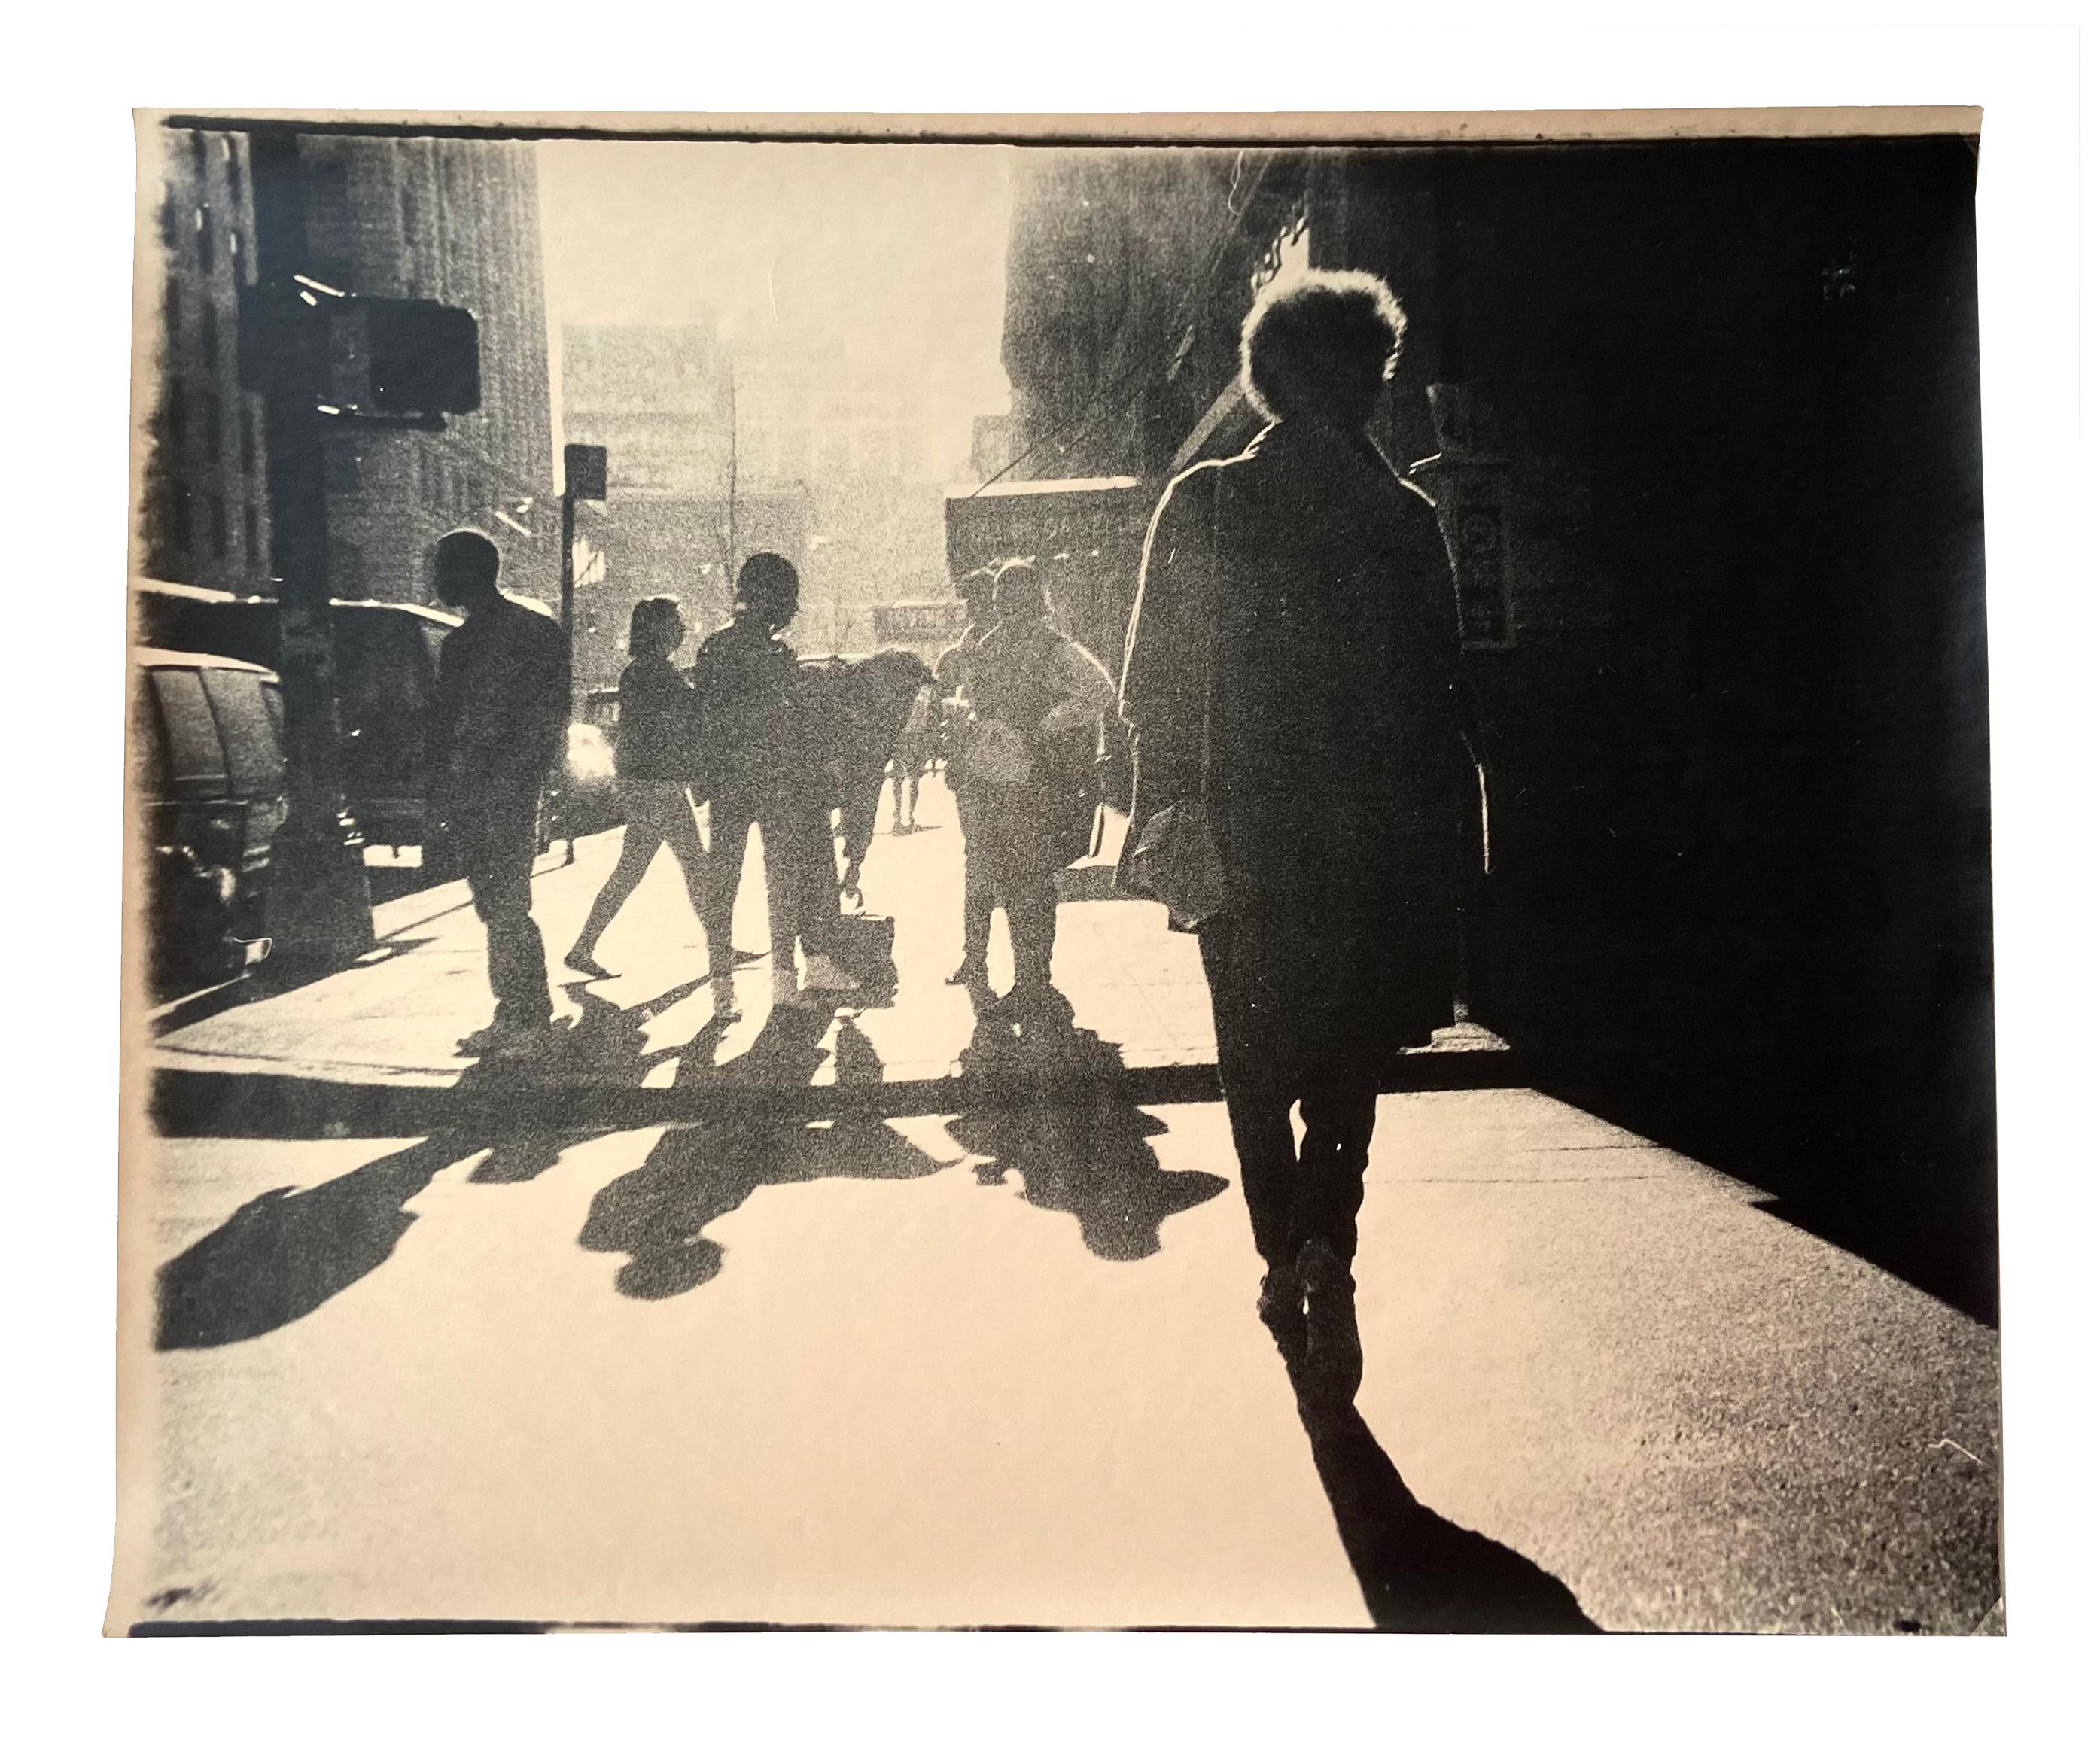 Manhattan photograph 'New York Walk' 1984 (1980s New York street photography)  - Photograph by Fernando Natalici